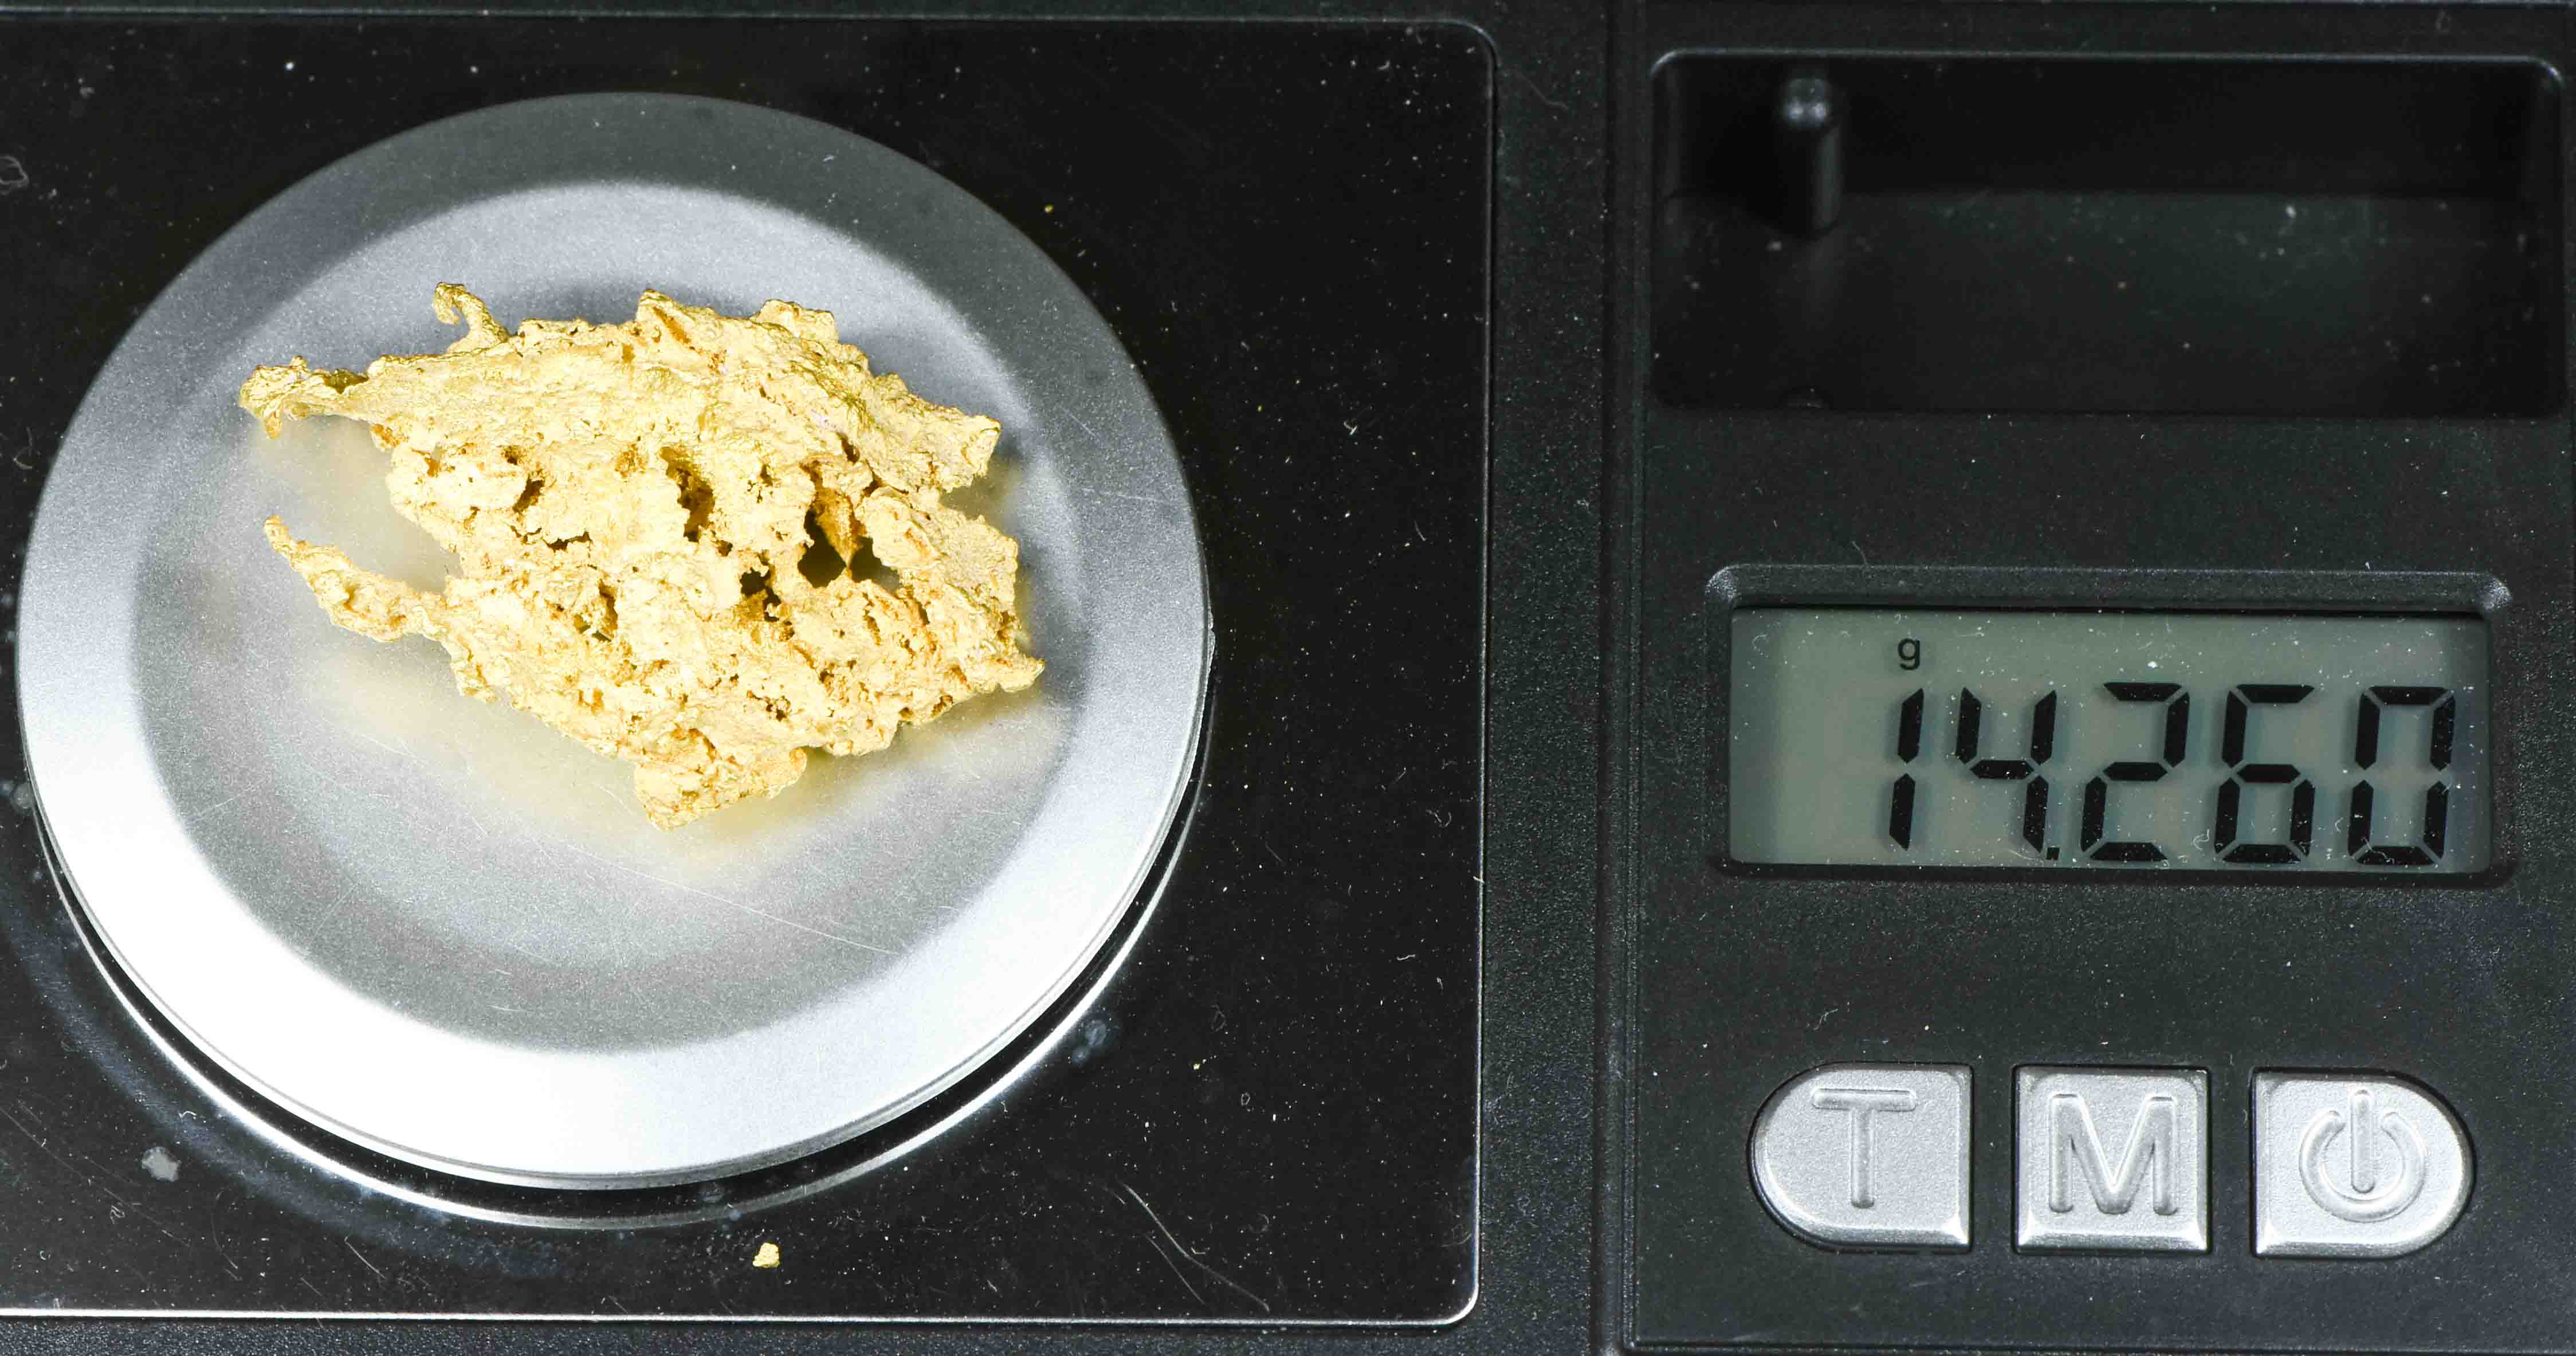 #1189 Natural Gold Nugget Australian 14.26 Grams Genuine